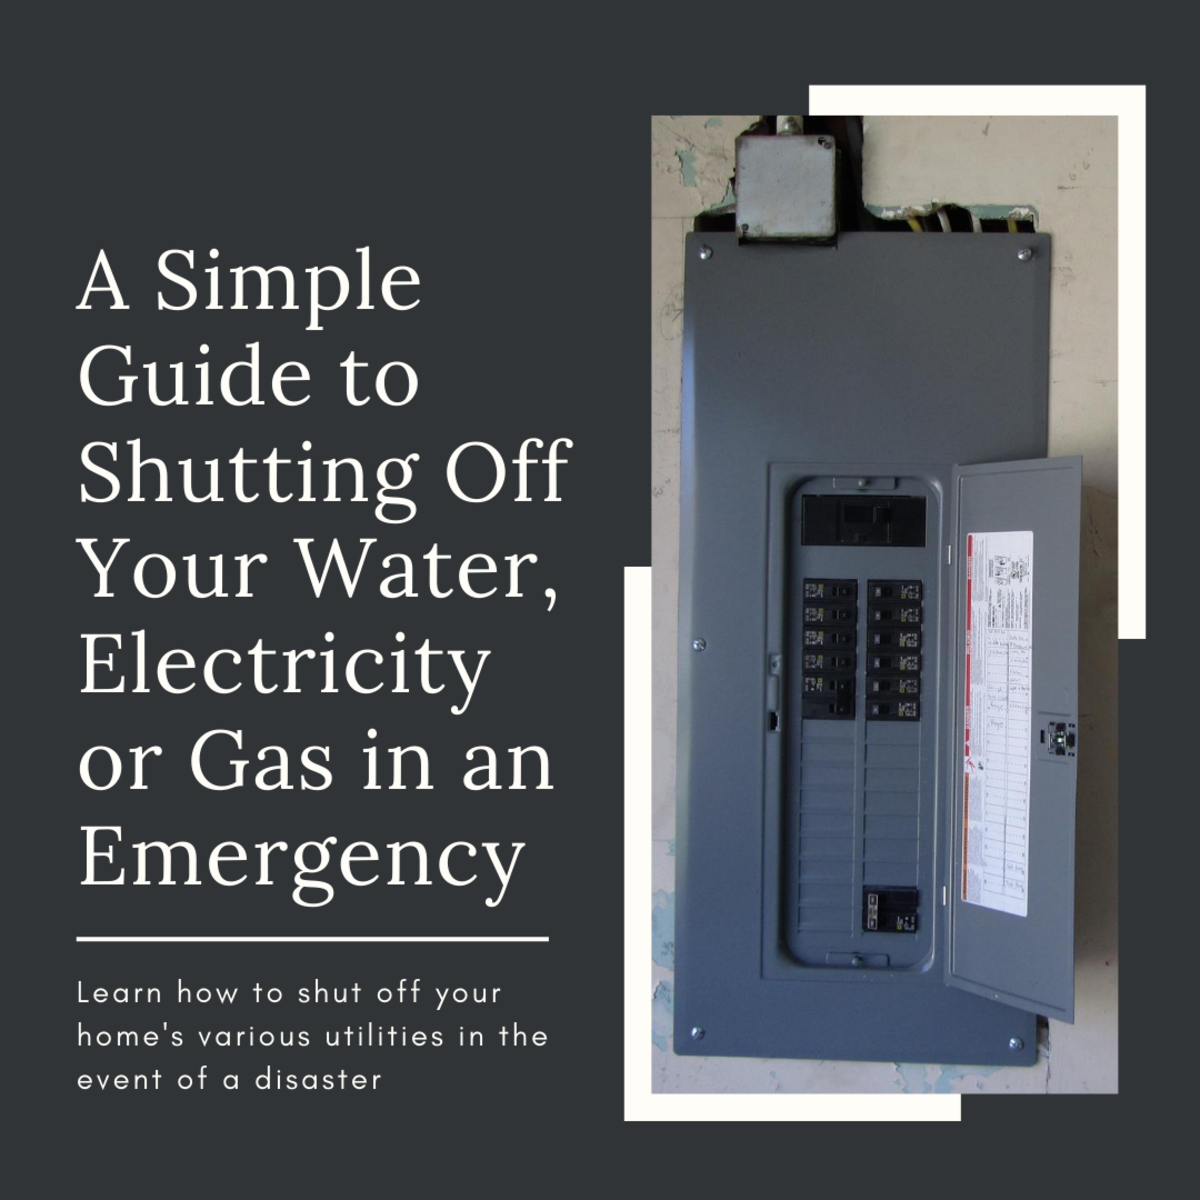 How to Shut Off Your Home's Utilities in an Emergency Dengarden